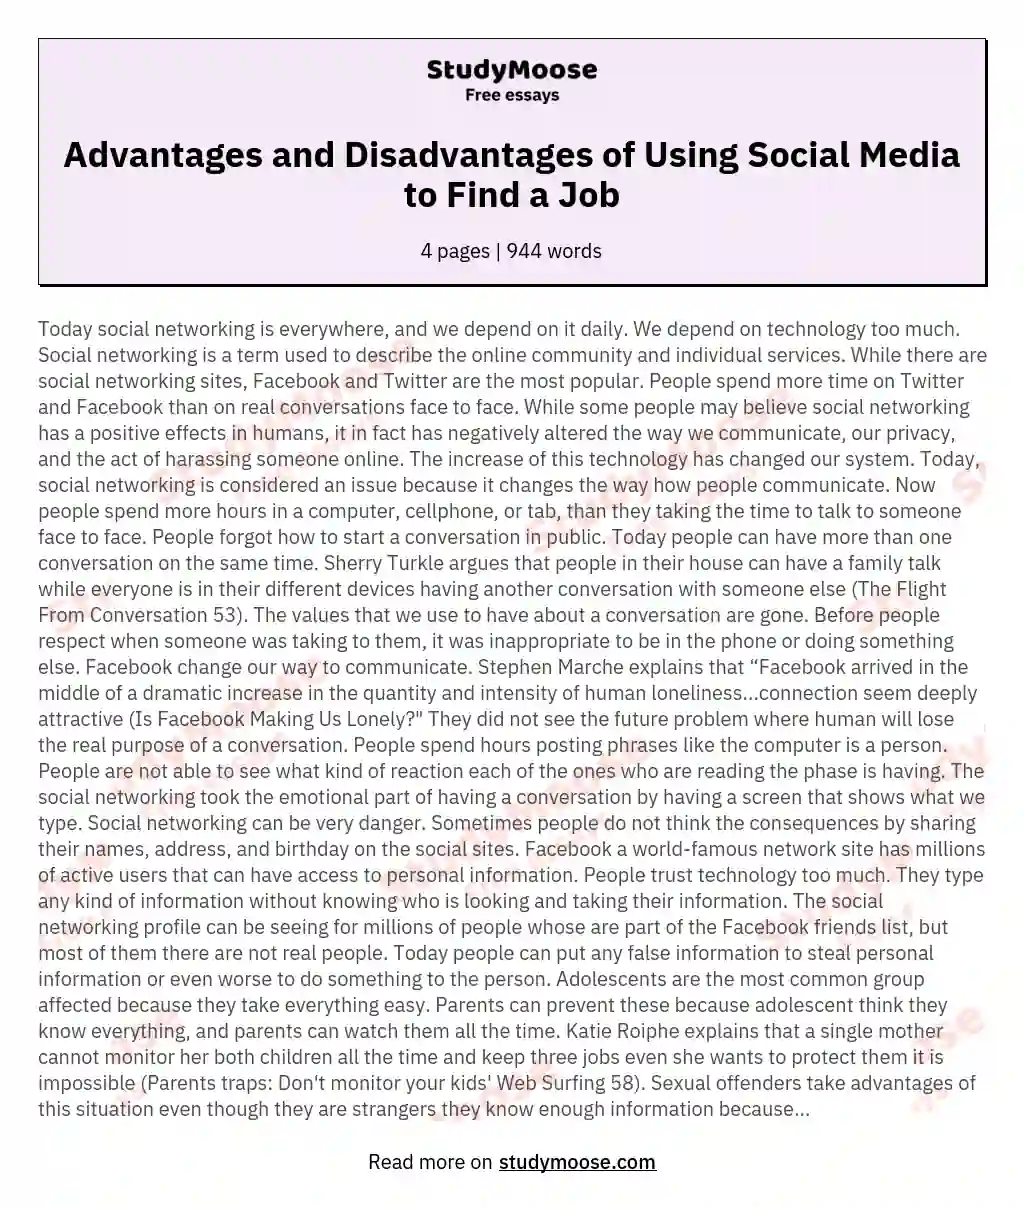 Advantages and Disadvantages of Using Social Media to Find a Job essay